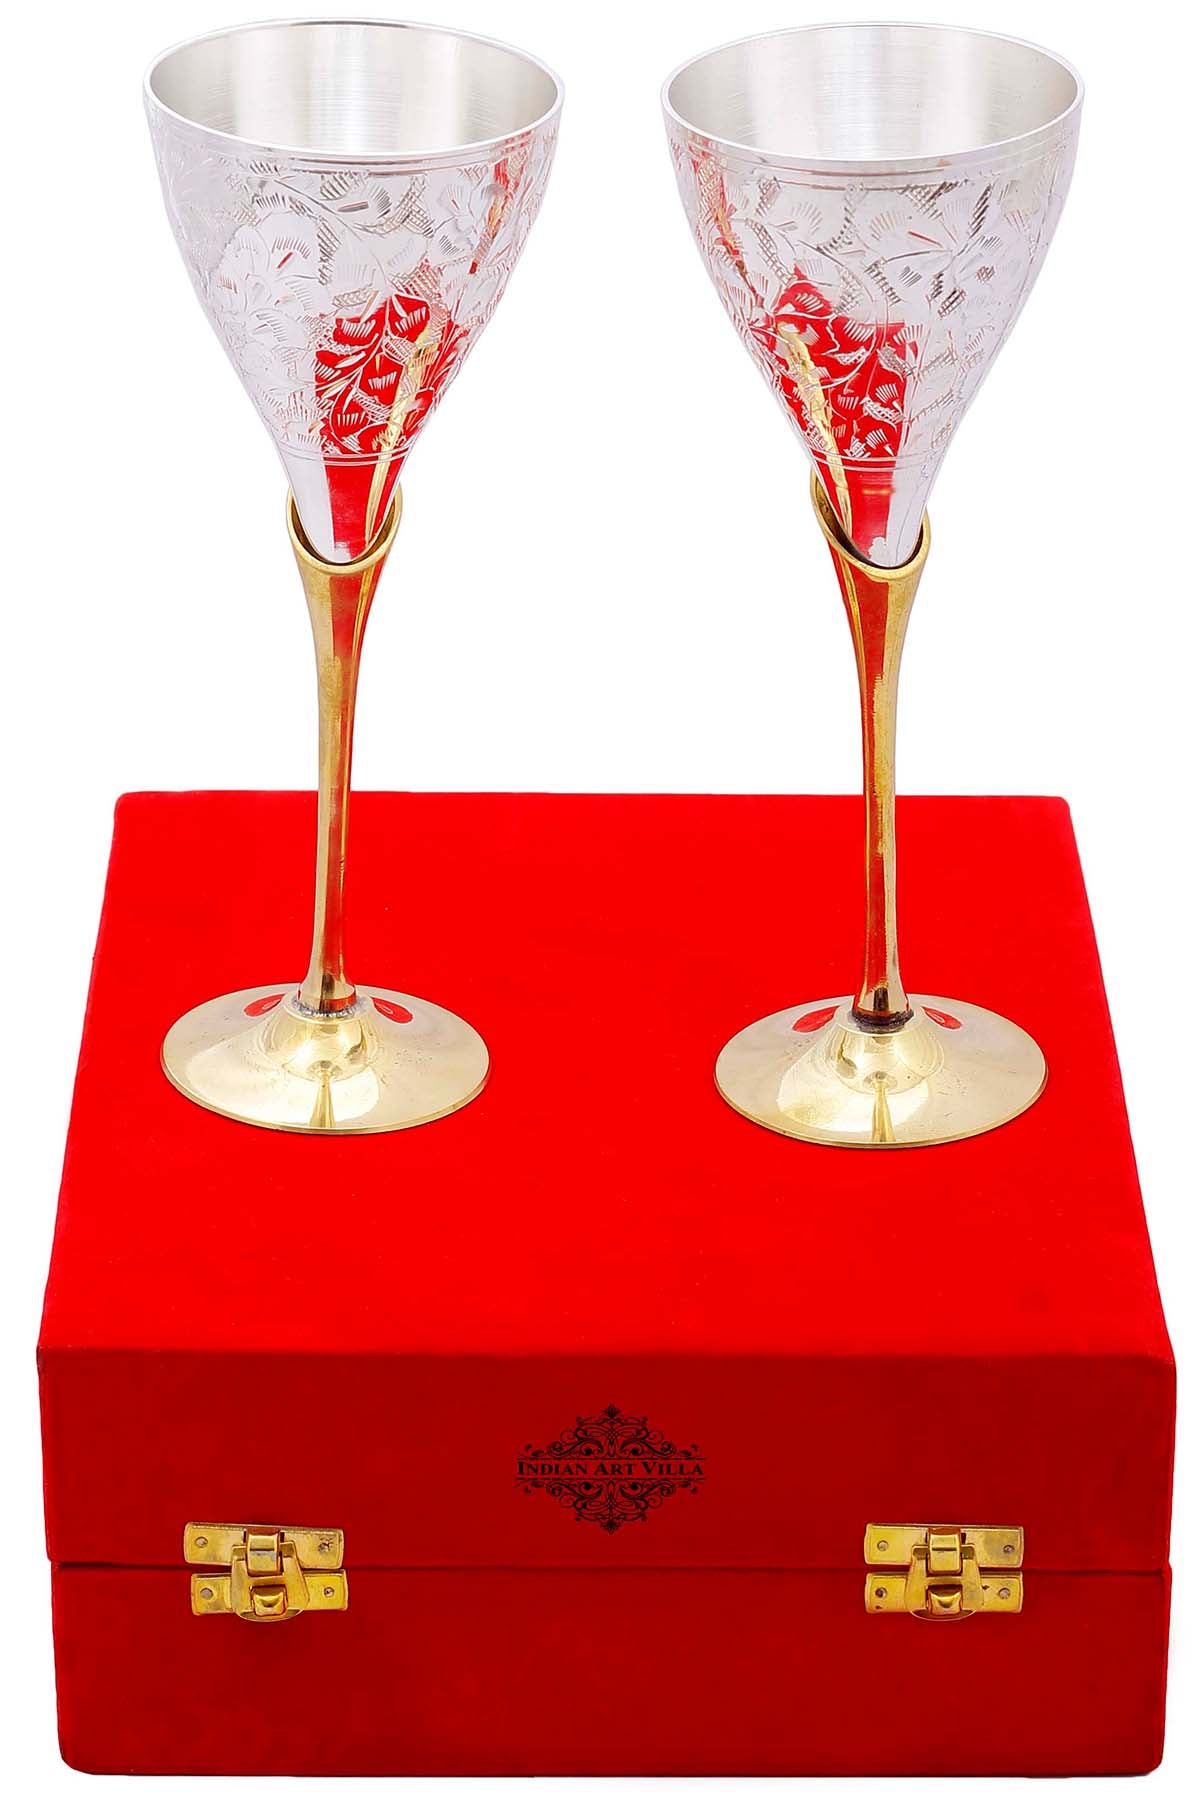 Carved Brass Wine Glass 6 Piece Set Golden Goblet Home Barware